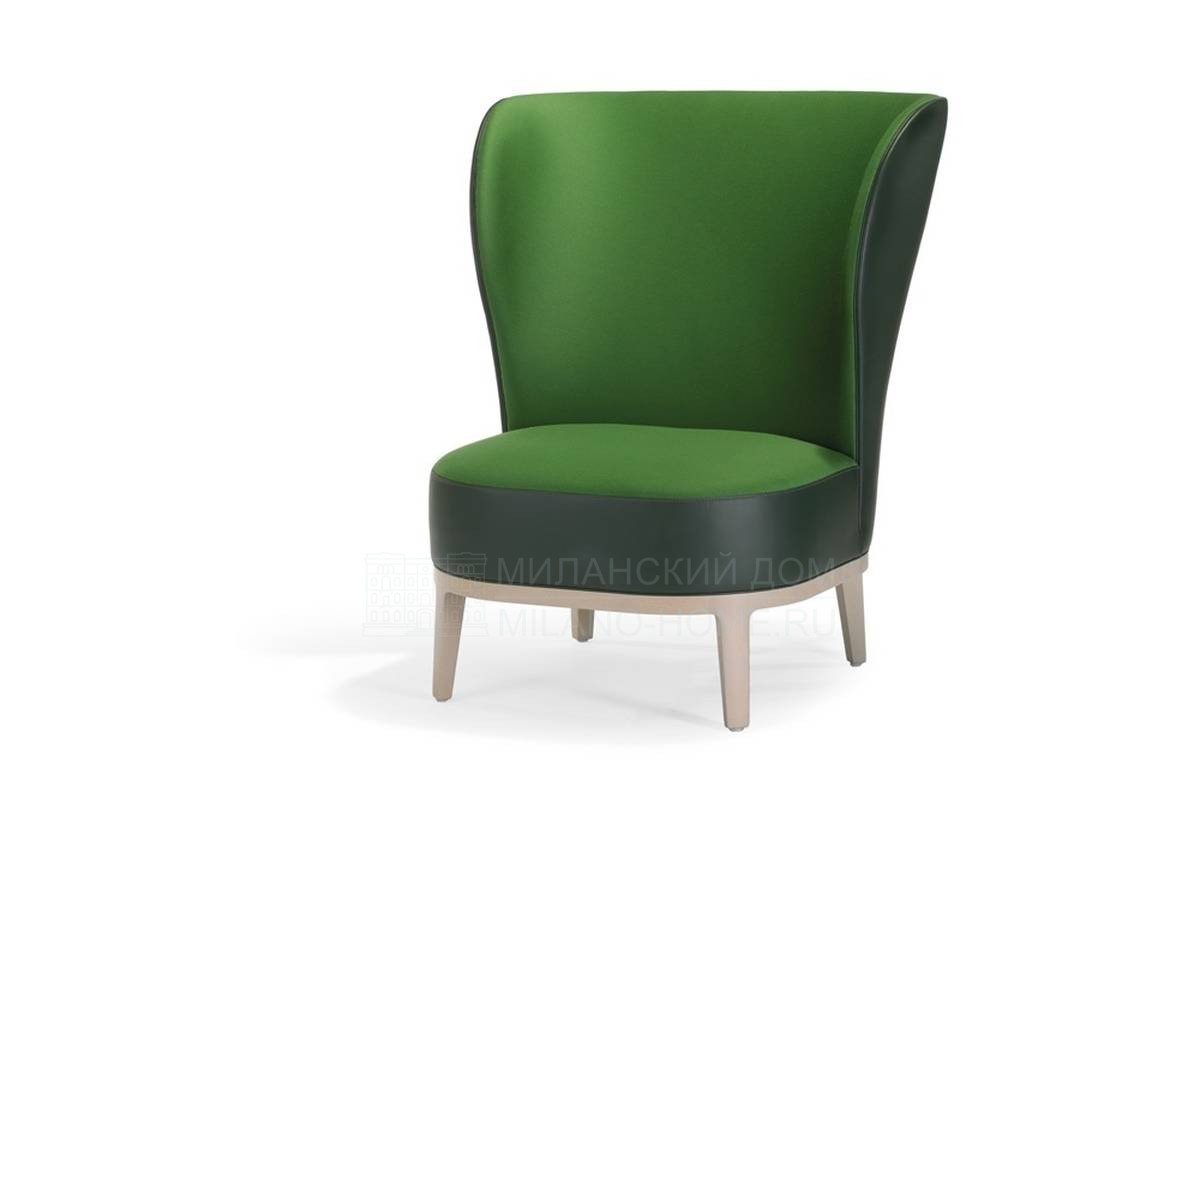 Круглое кресло Spring / art.841P из Италии фабрики POTOCCO